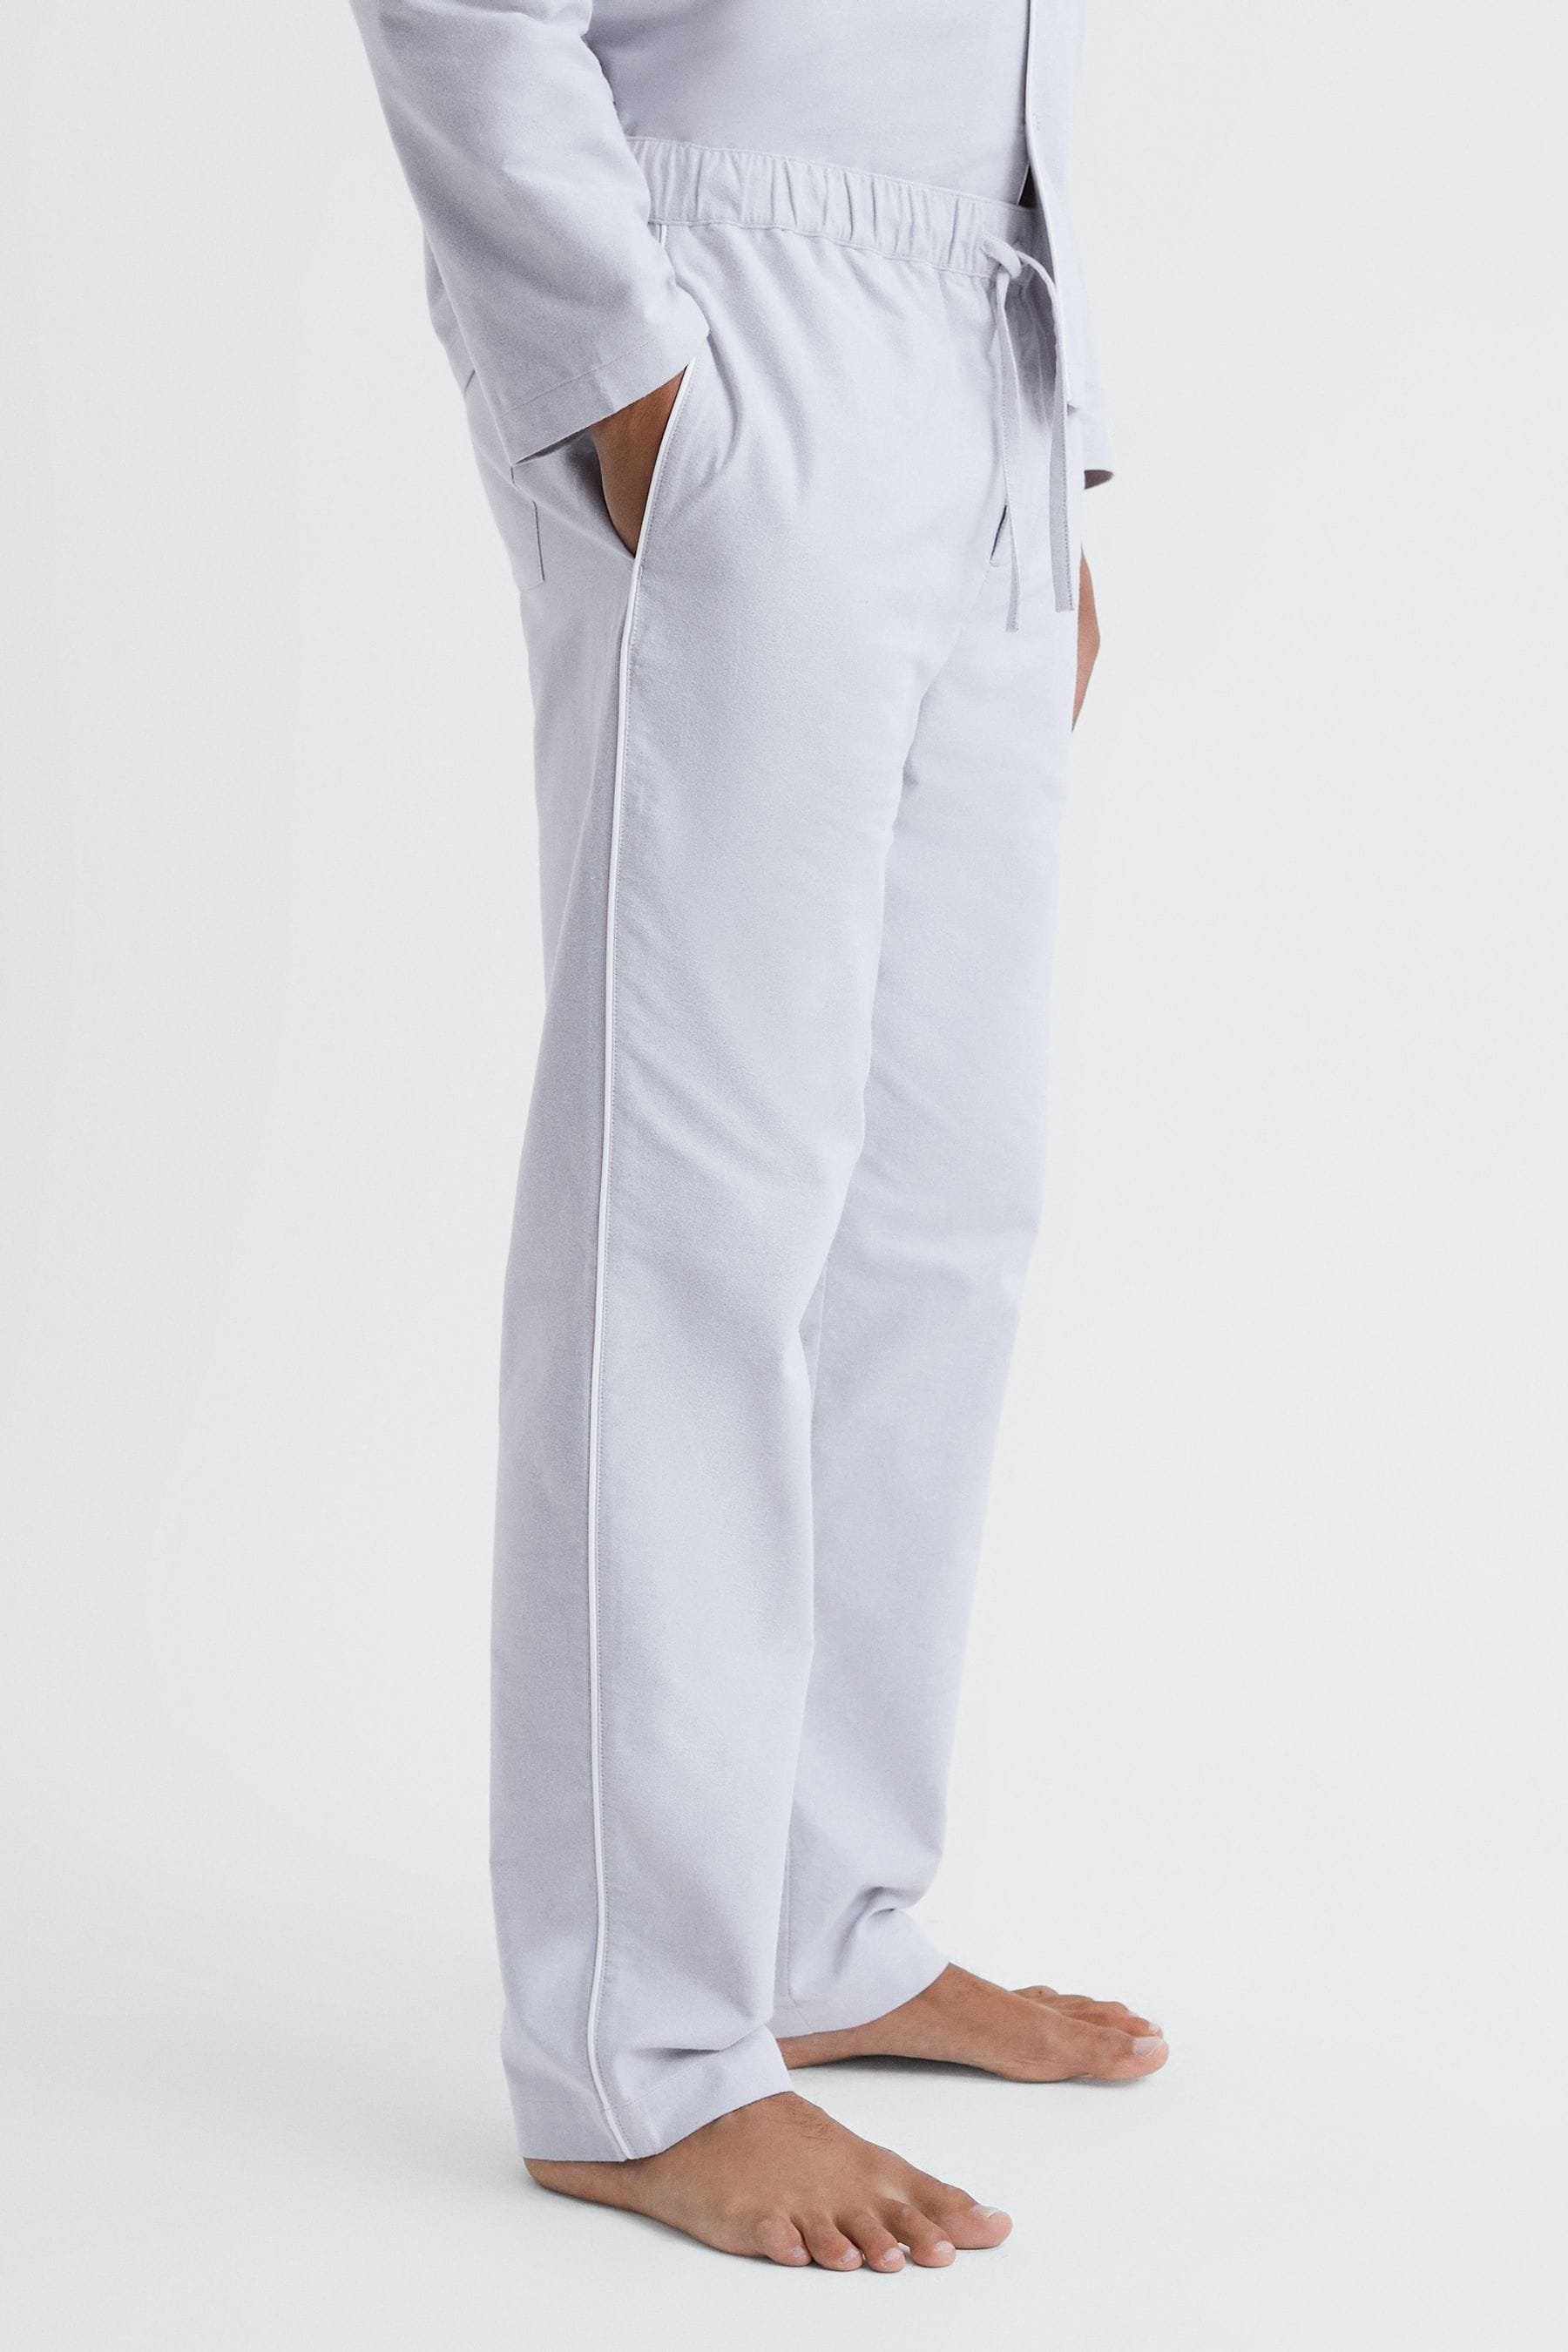 Reiss Farley - Ice Grey Cotton Drawstring Pyjama Bottoms, M